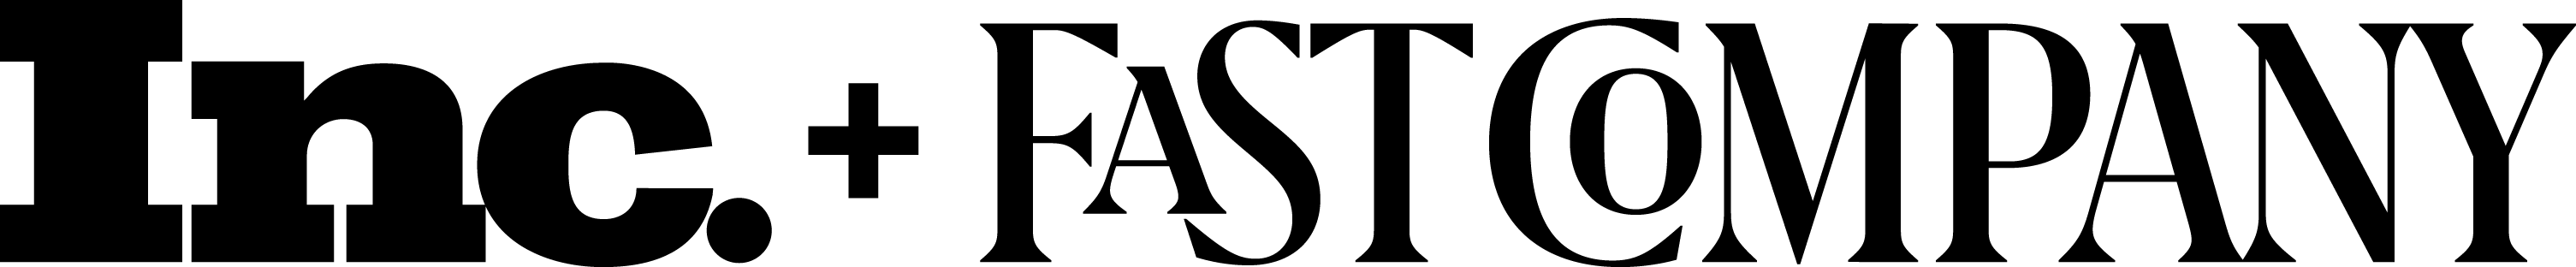 Inc FC logo horizontal black